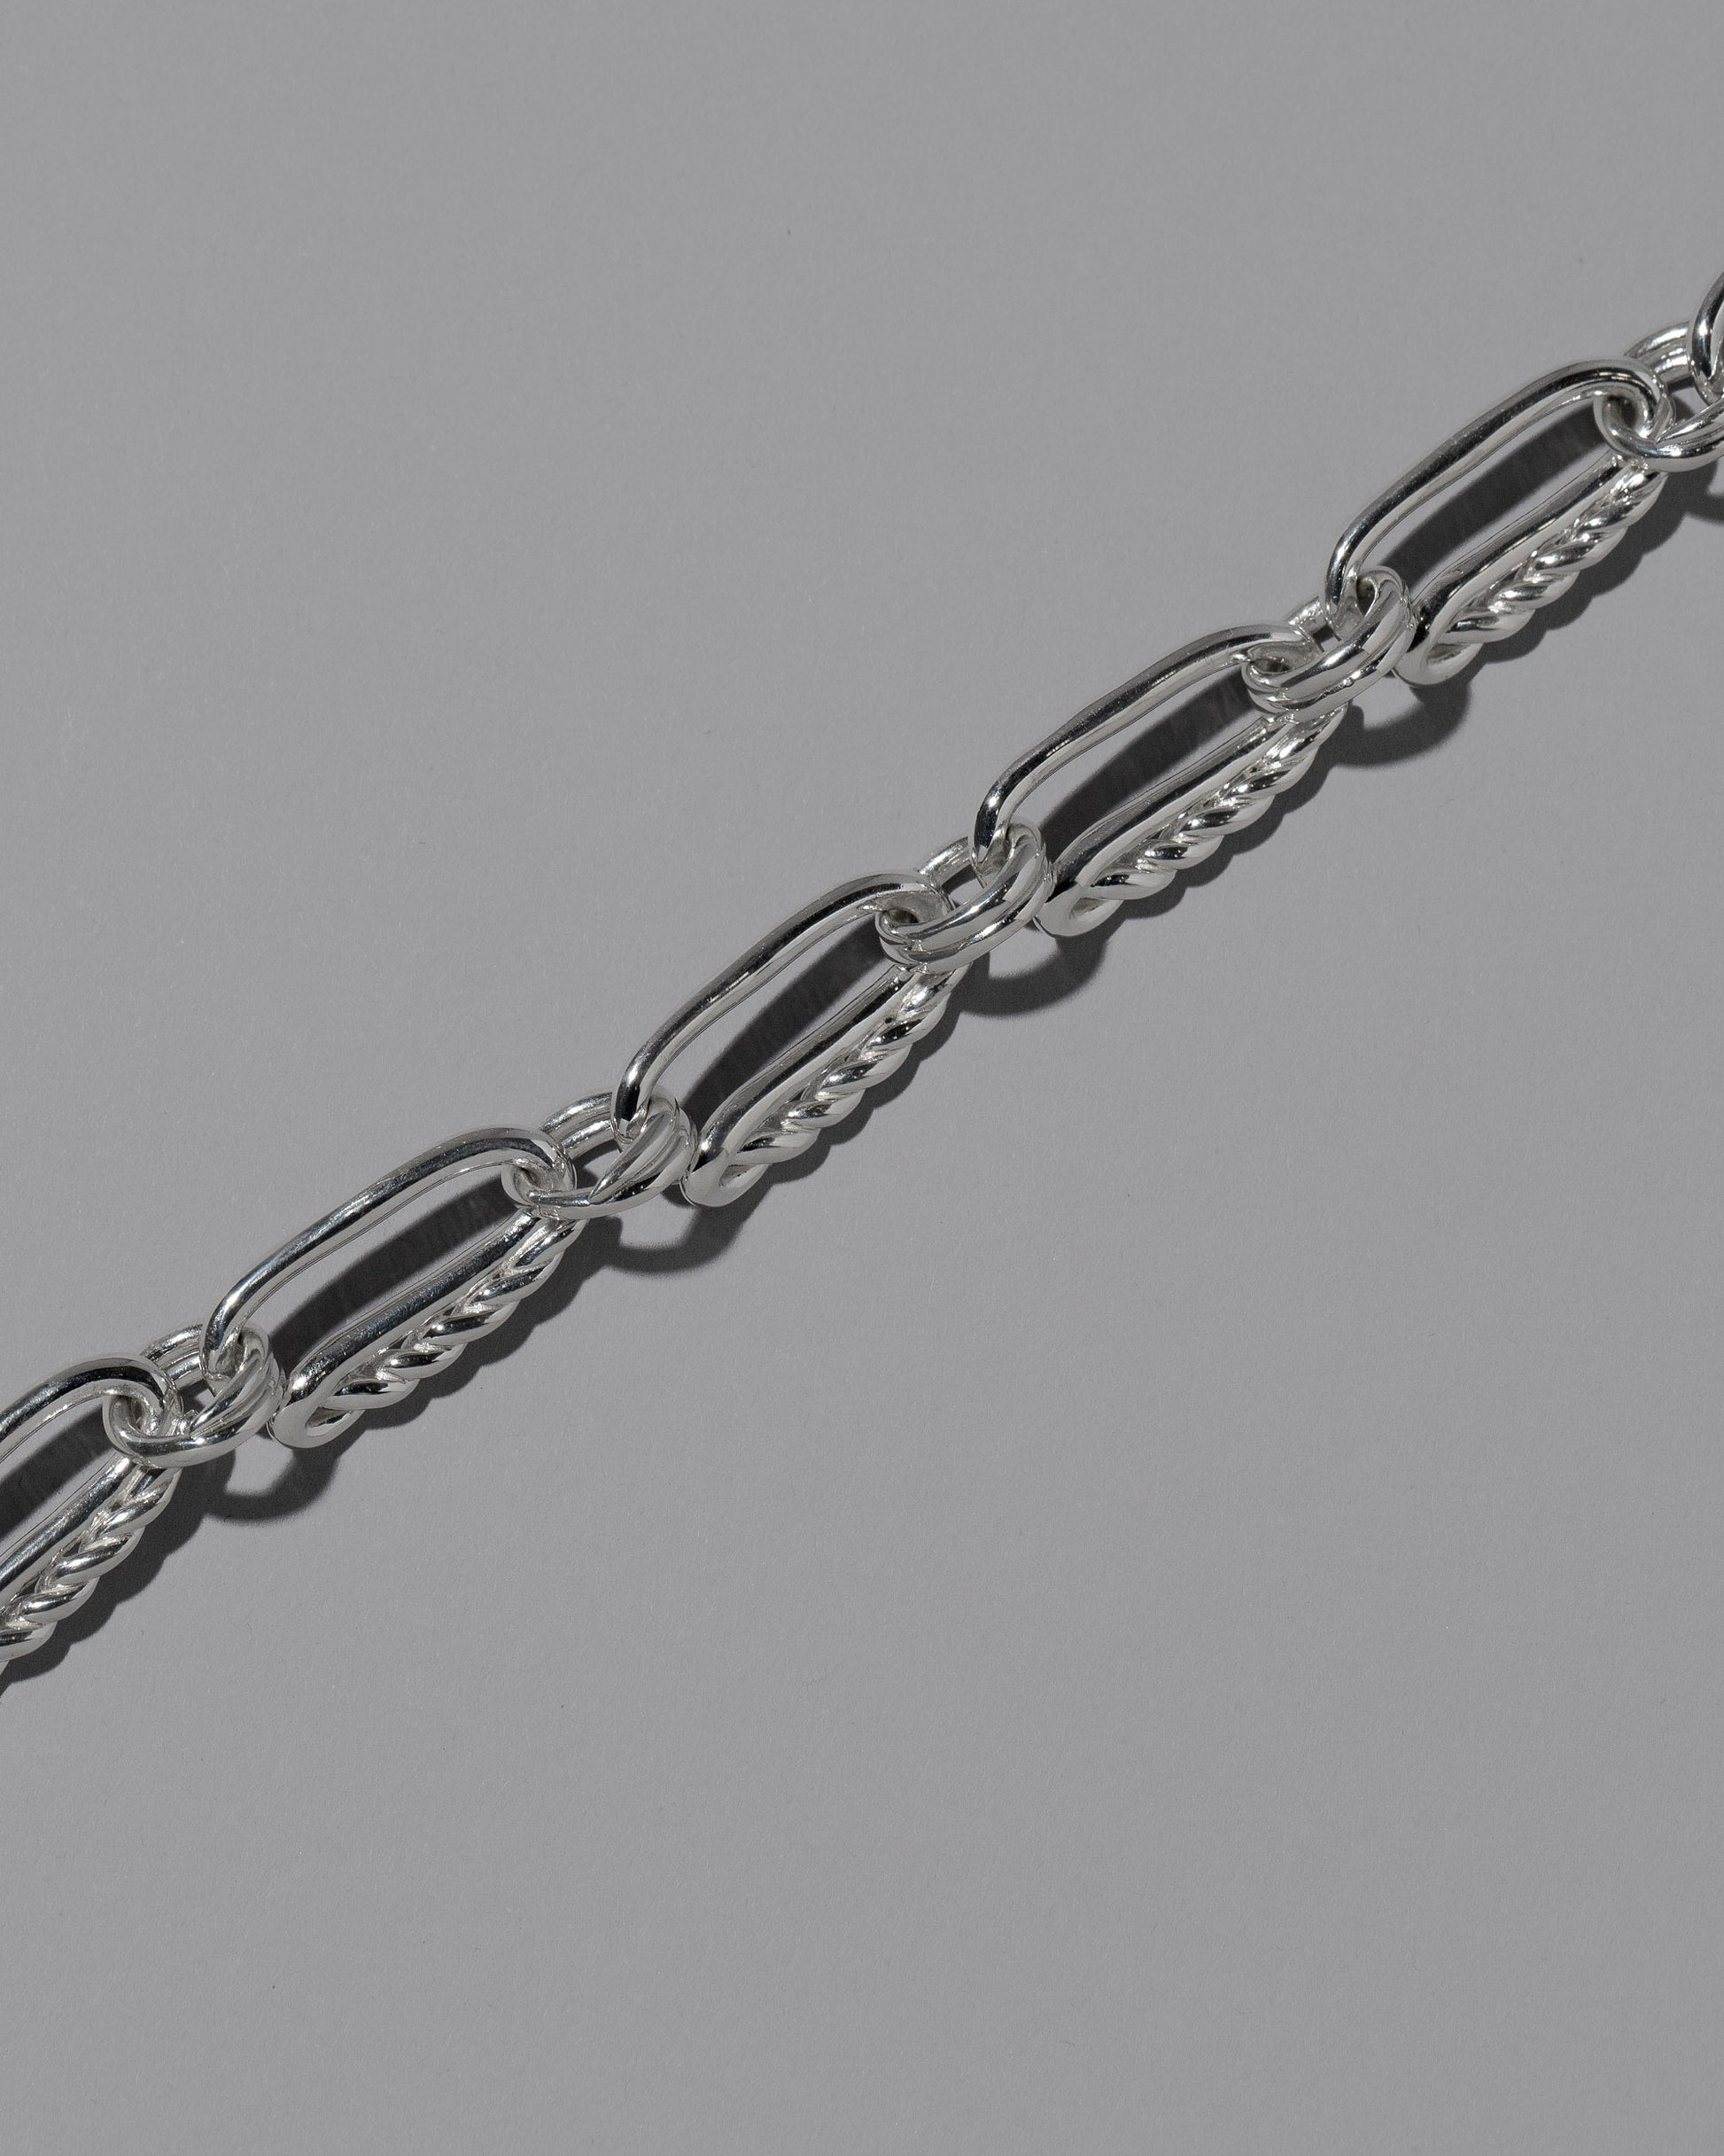 Closeup details of the CRZM Sterling Silver Ophiolite Bracelet on light color background.